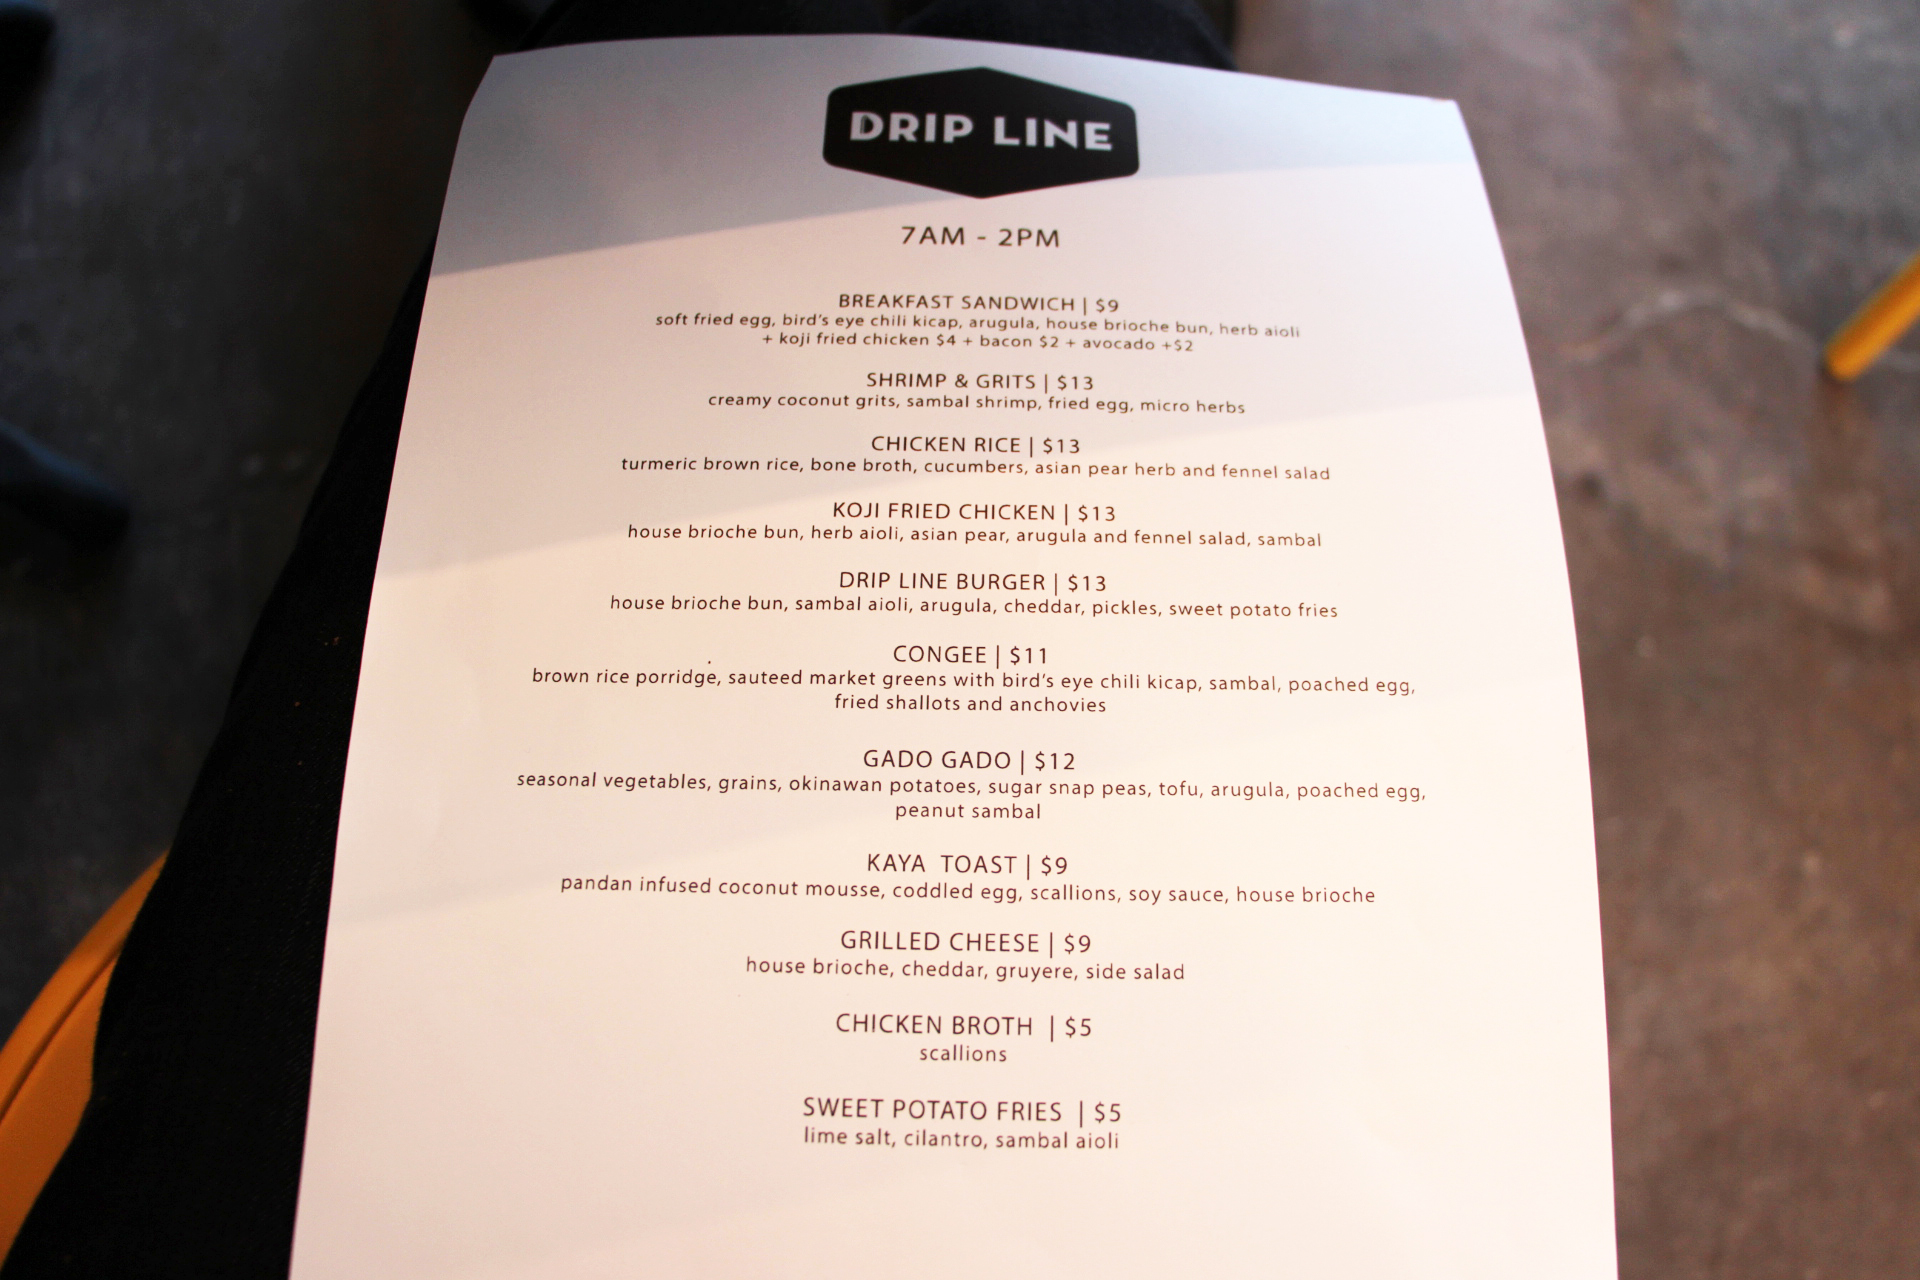 The Drip Line menu.